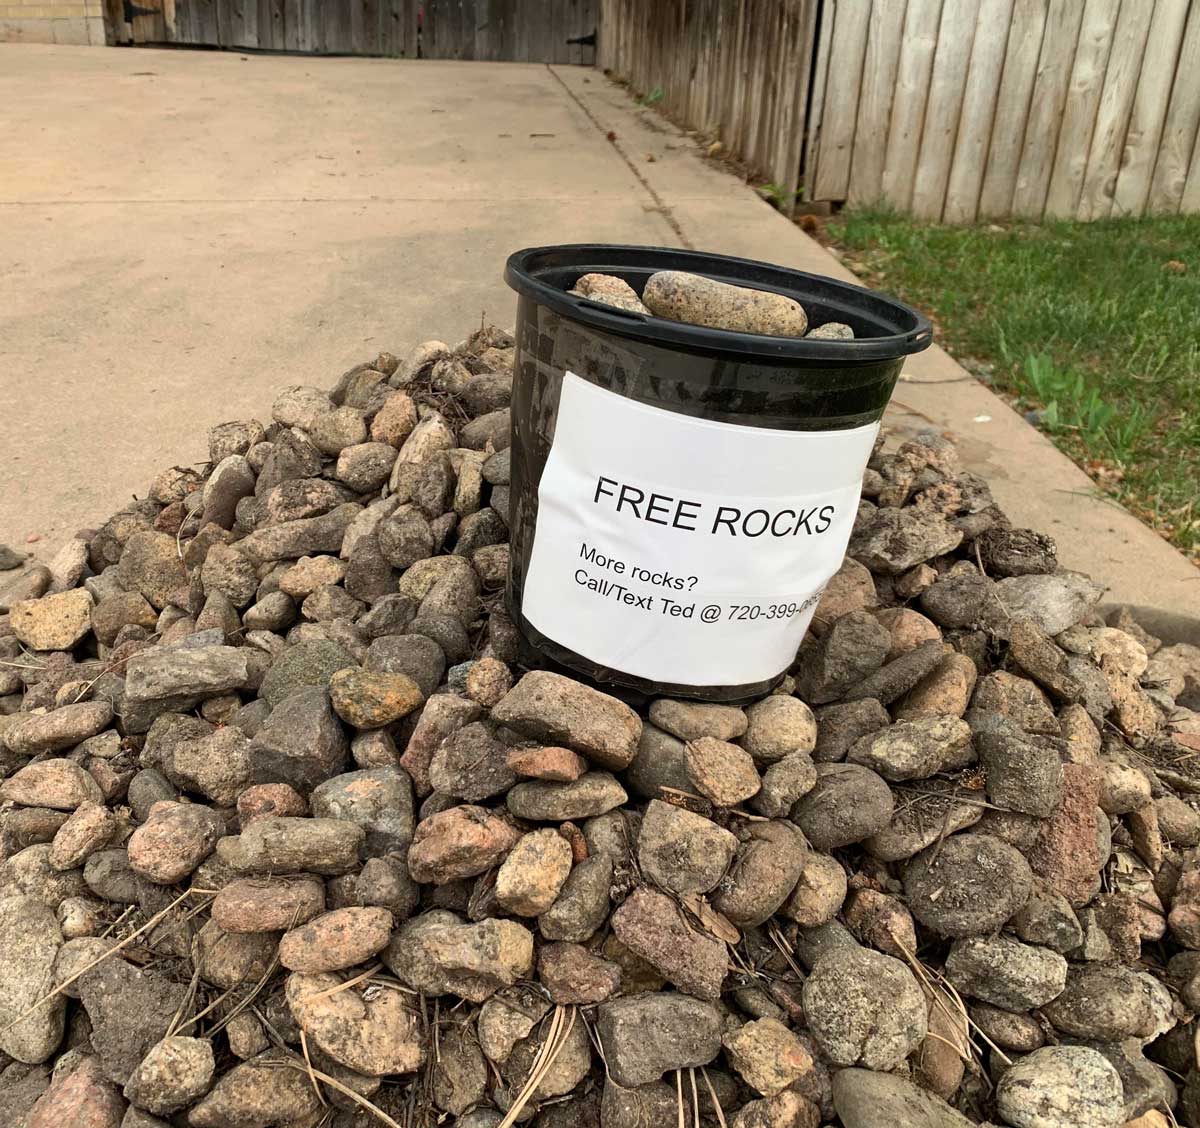 Need some rocks? I know a guy